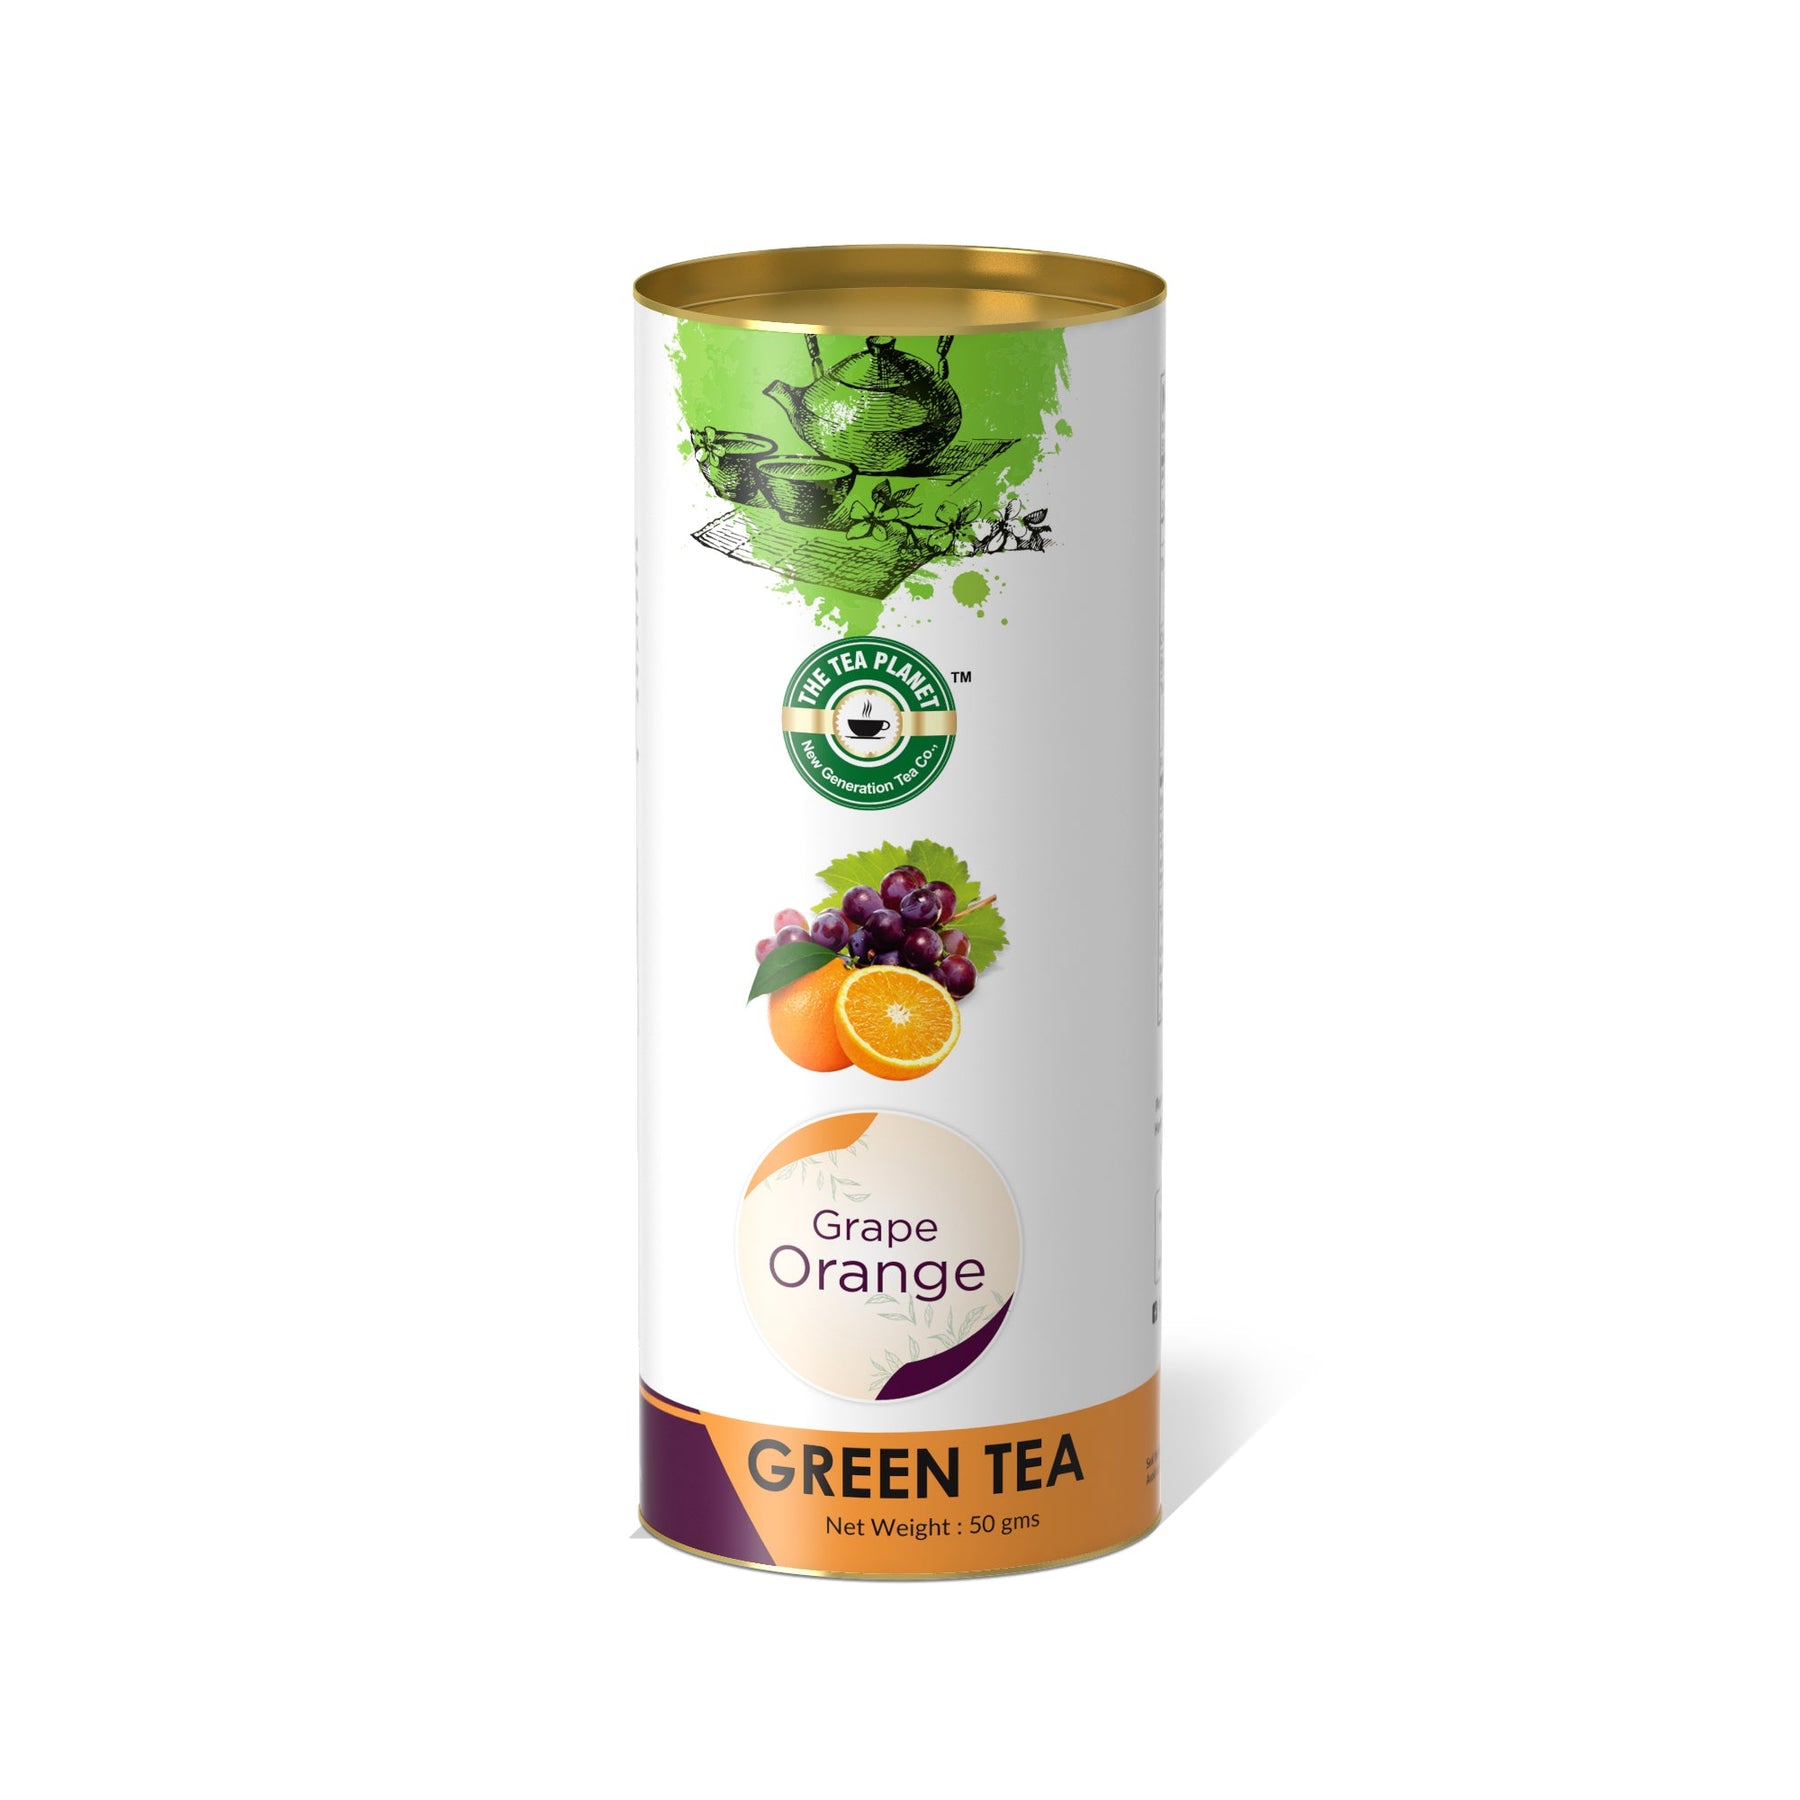 Grape Orange Orthodox Tea - 50 gms